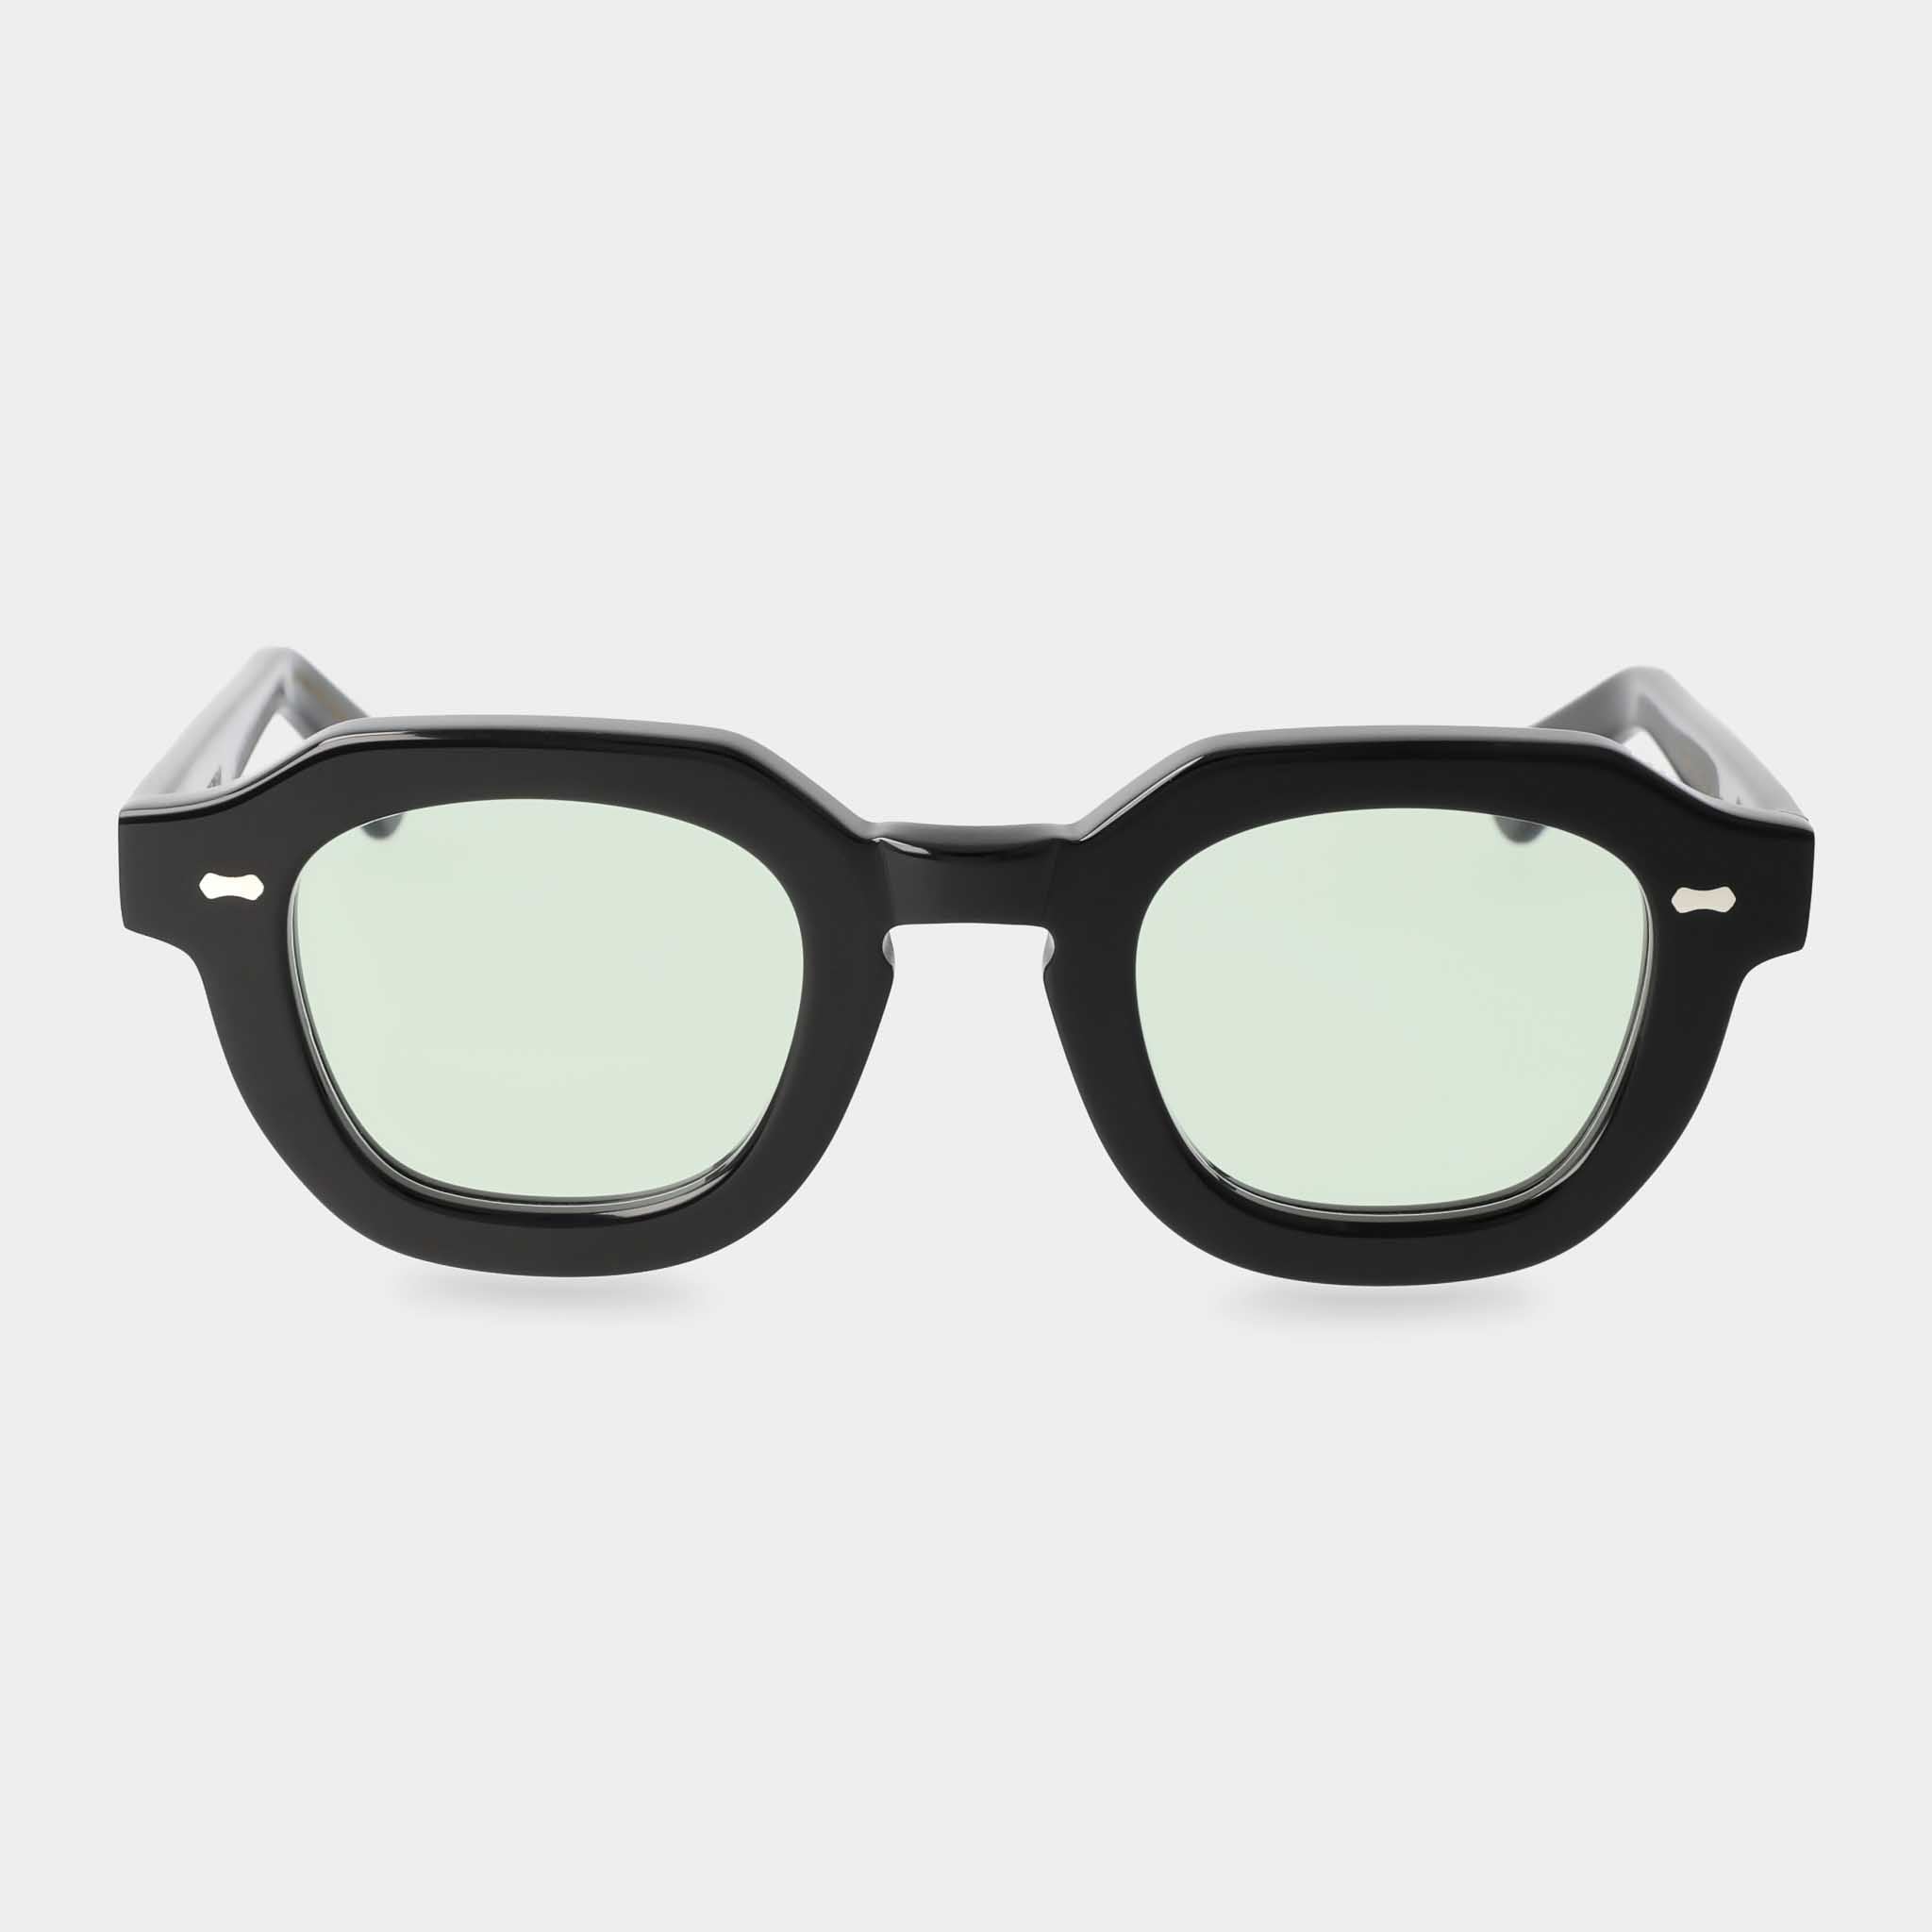 sunglasses-juta-eco-black-light-green-sustainable-tbd-eyewear-front